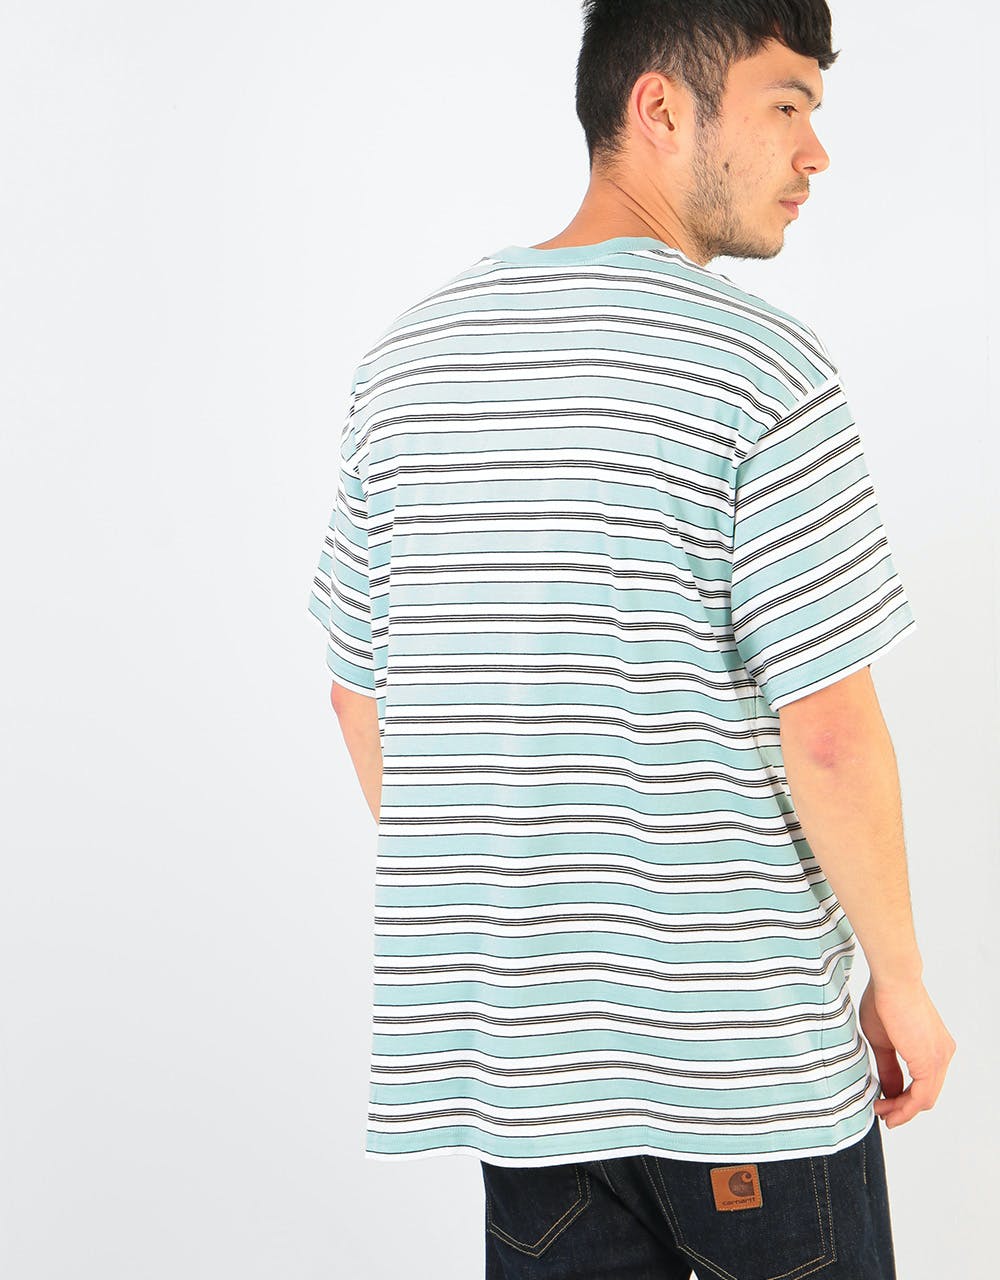 Carhartt WIP S/S Huron Stripe T-Shirt - Soft Aloe/Black